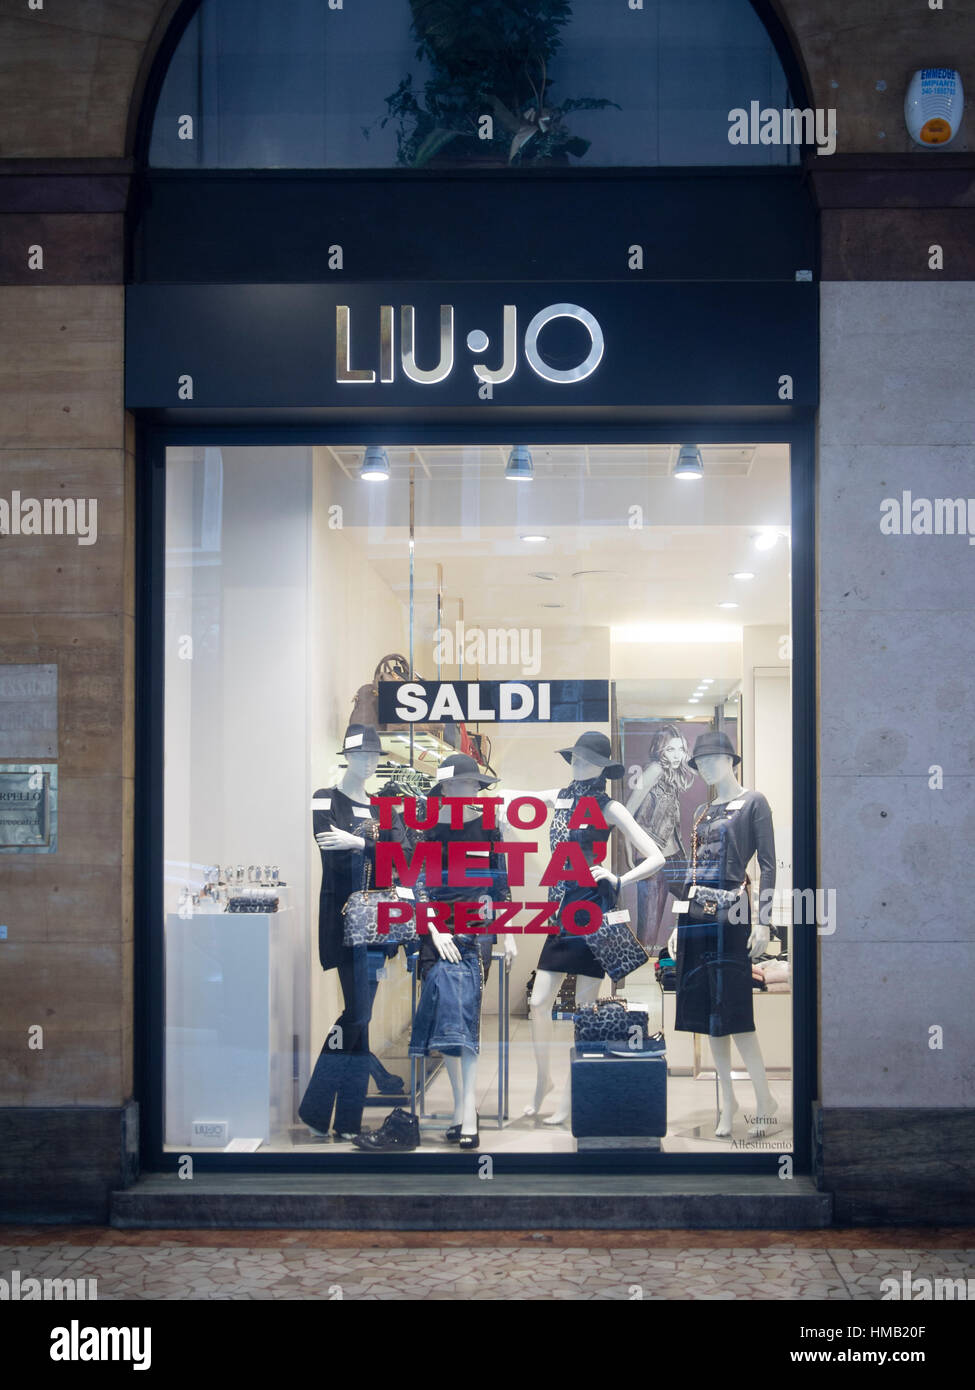 Liu Jo clothing store Stock Photo - Alamy